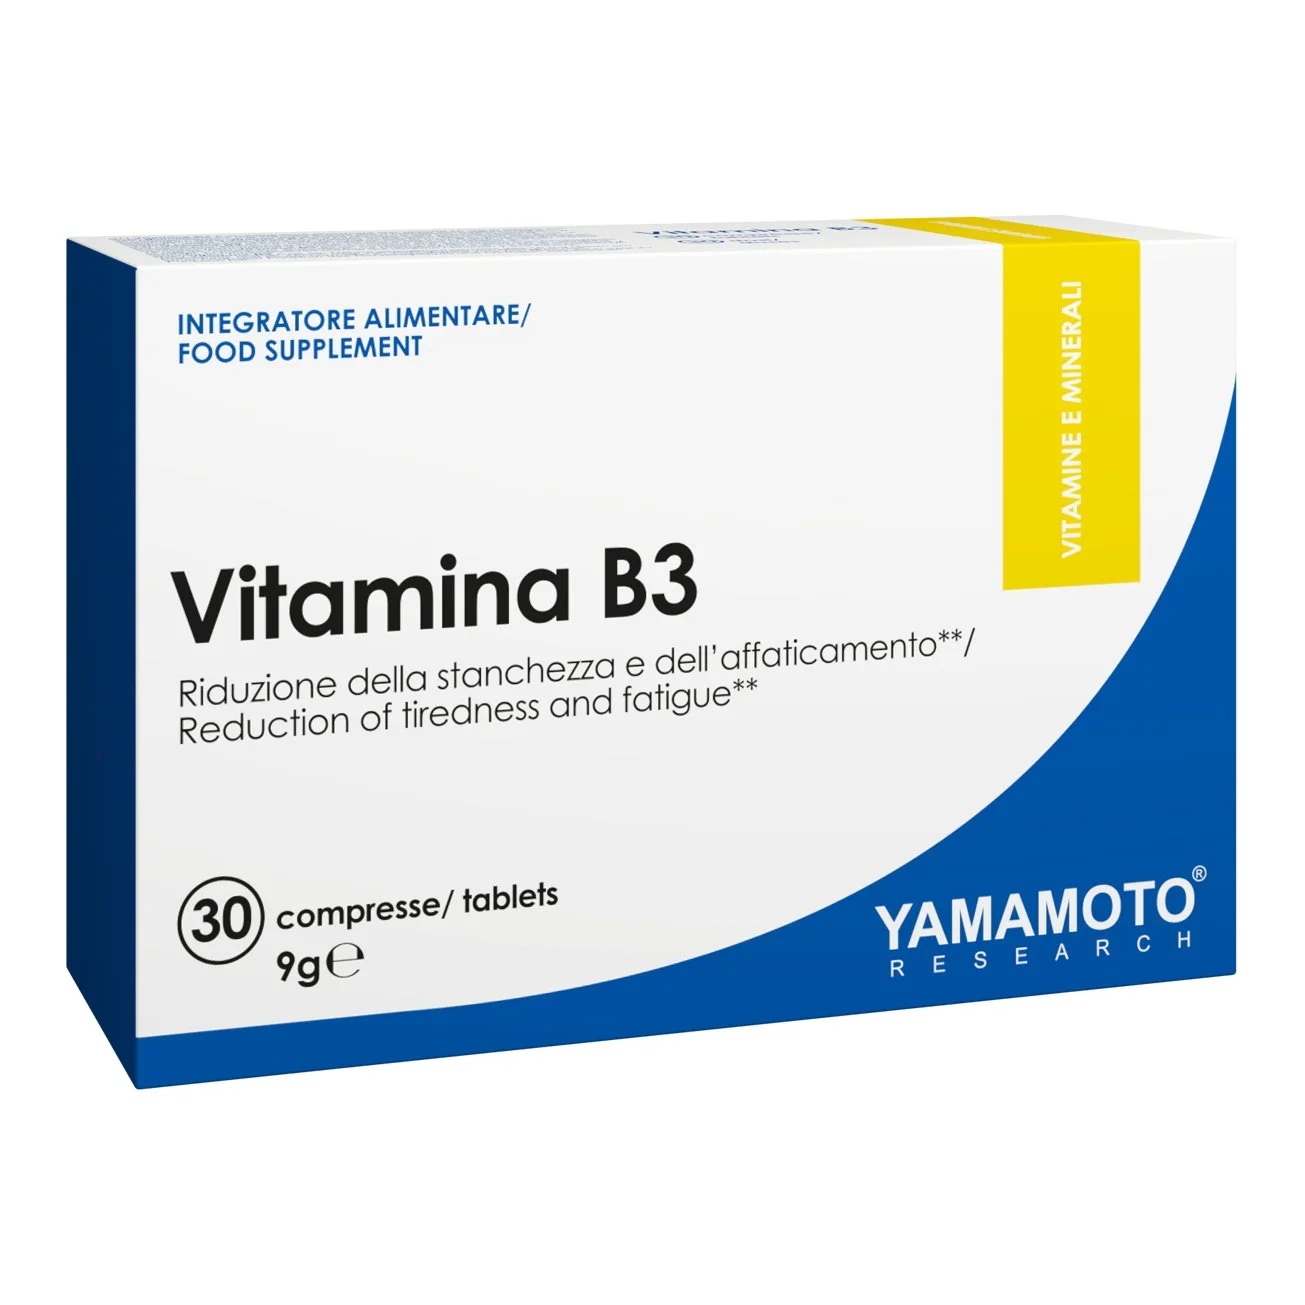 Yamamoto Natural Series Vitamin B3 / 30 capsules